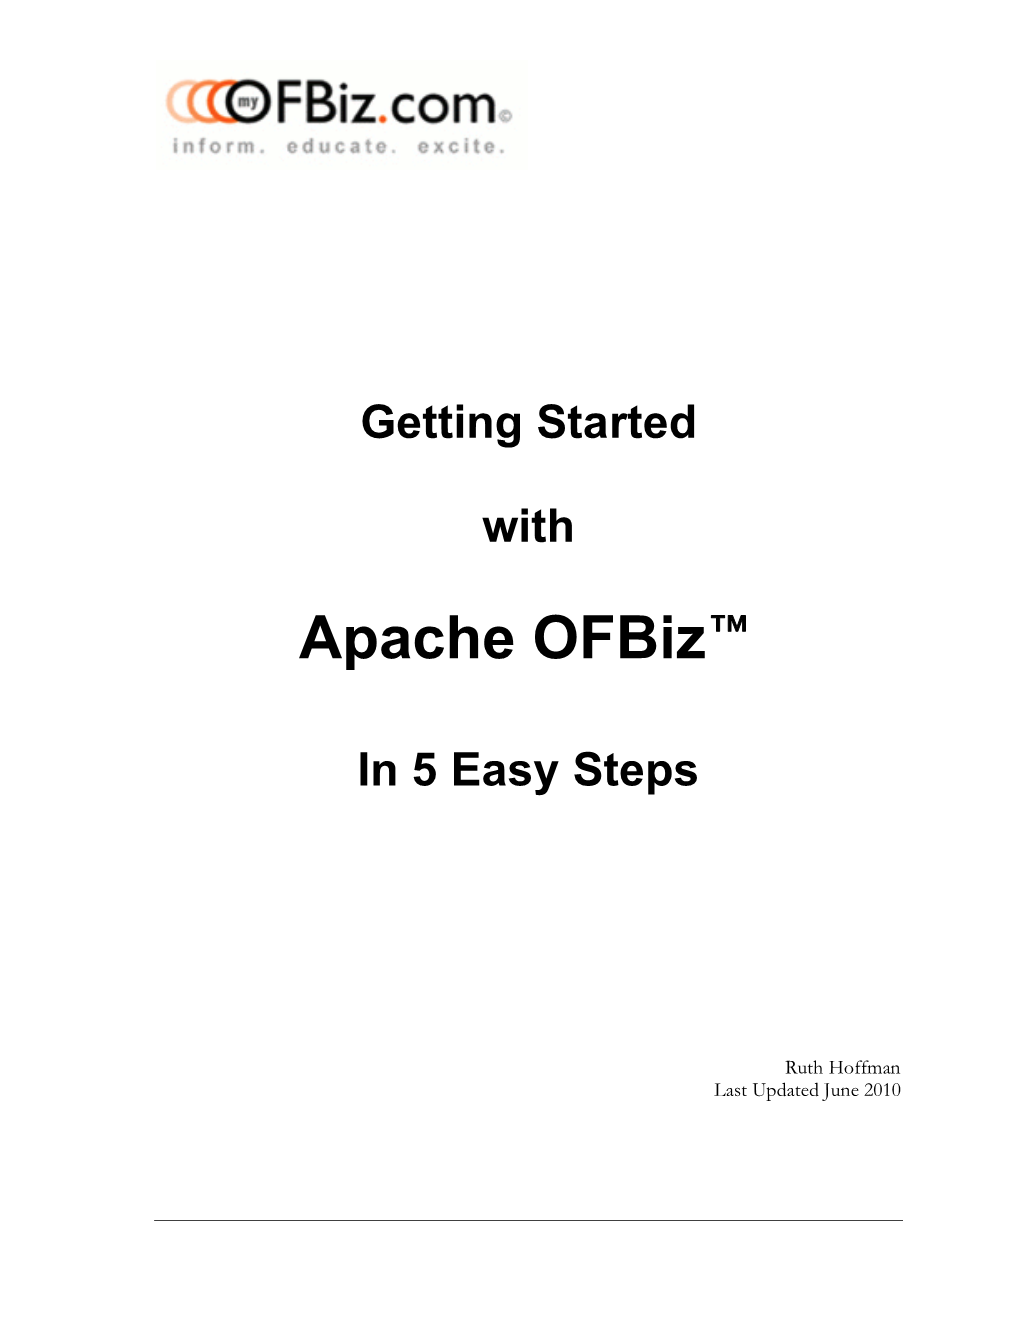 Apache Ofbiz™